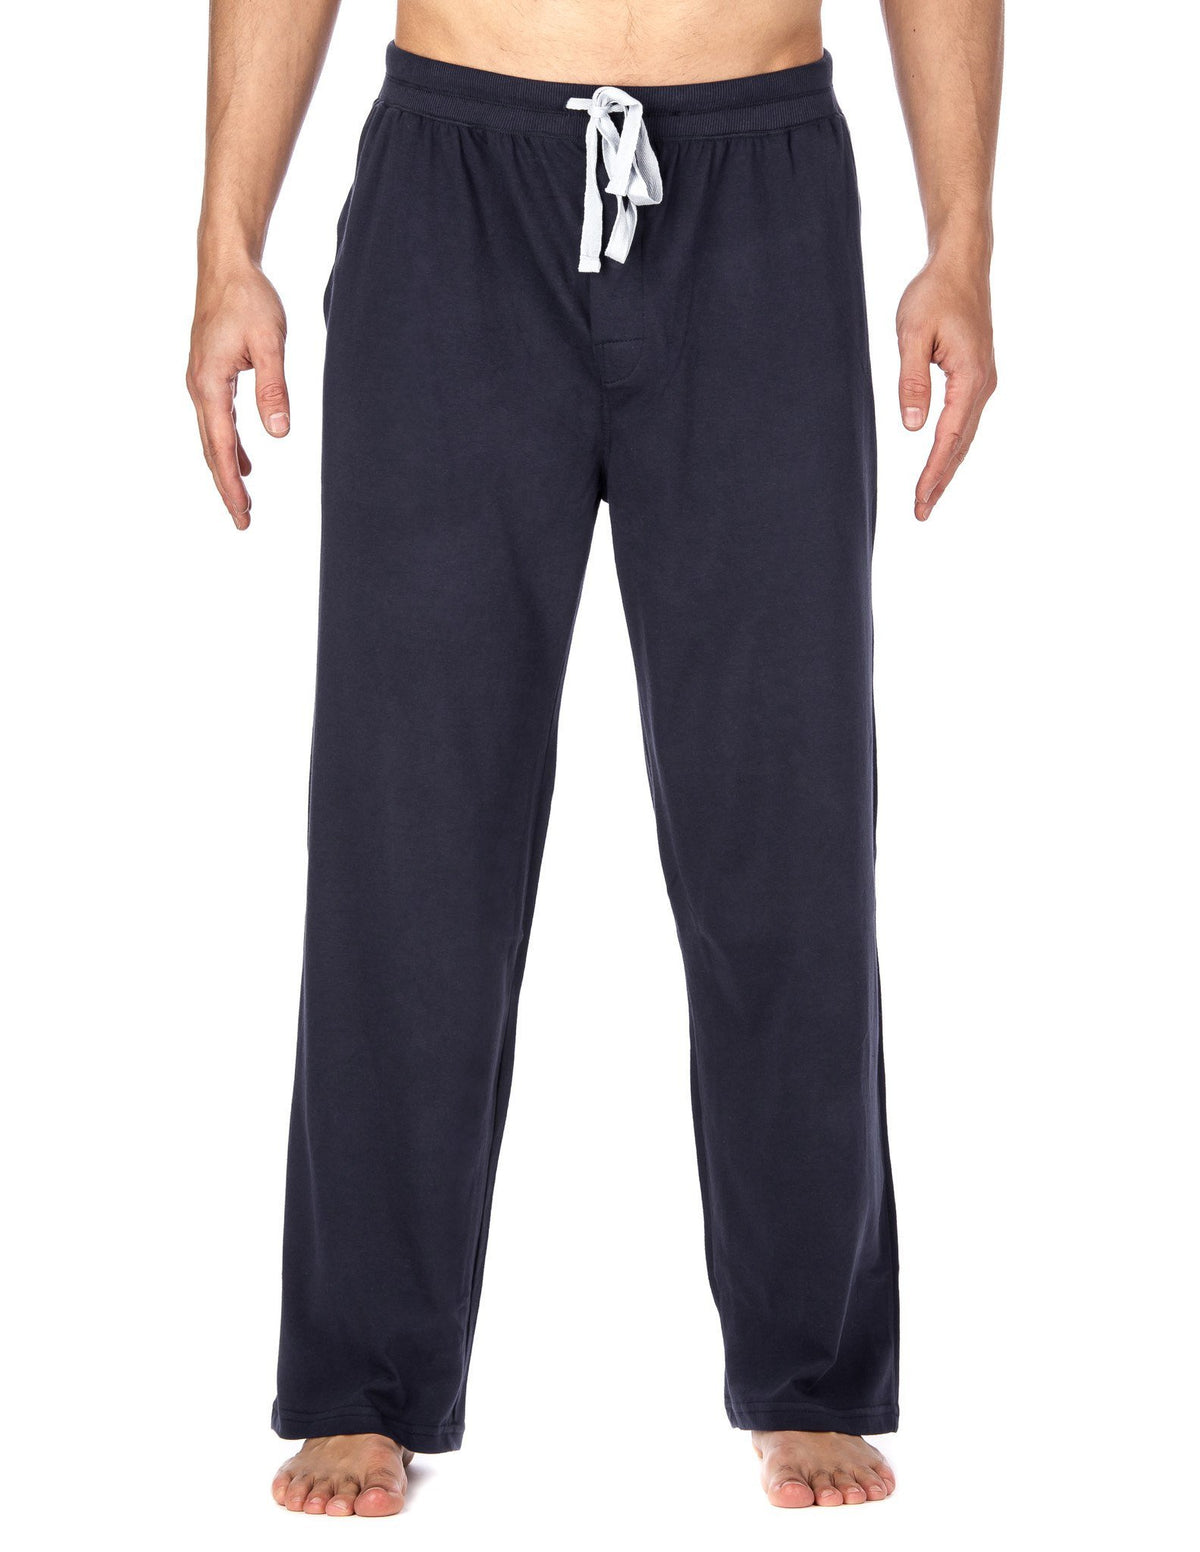 Men's Premium Knit Lounge/Sleep Pants - Navy